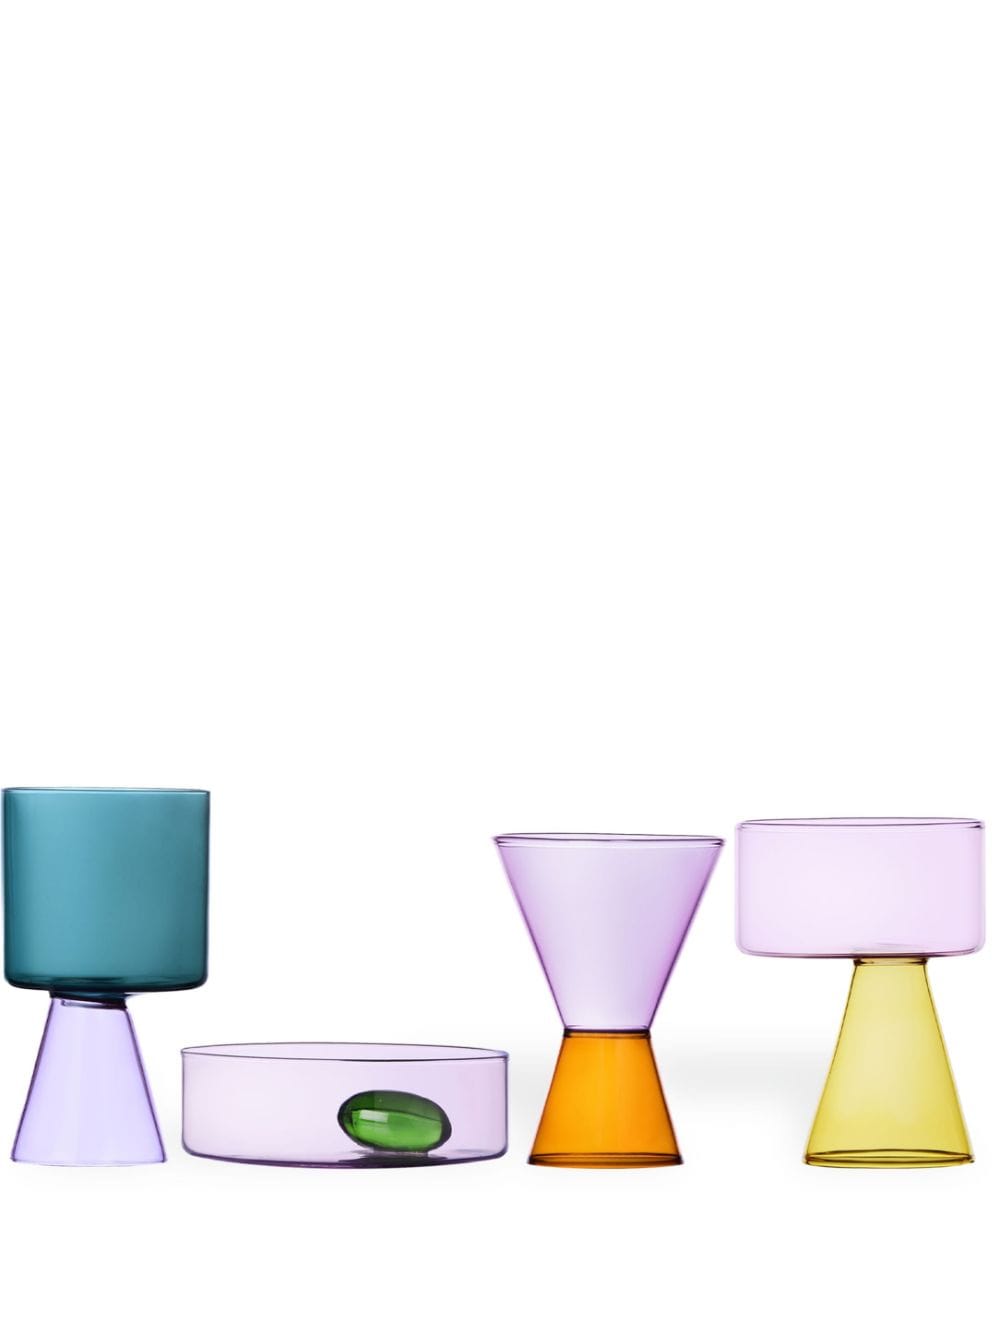 Ichendorf Milano Travasi glasses and bowl (set of 4) - Multicolour von Ichendorf Milano